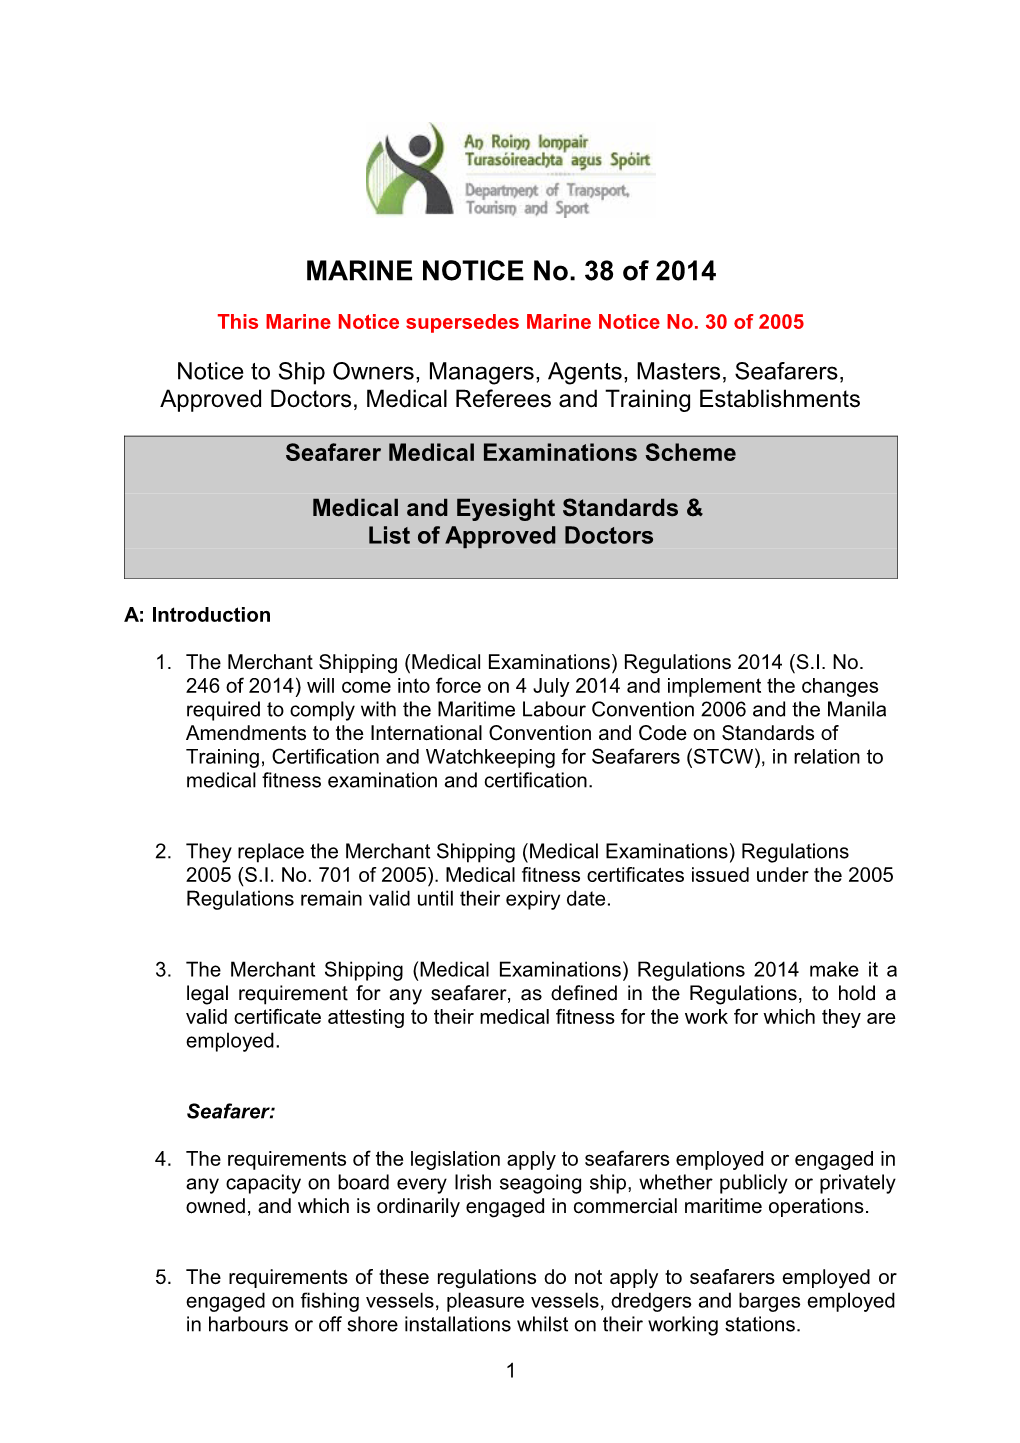 Seafarer Medical Examination System, Medical & Eyesight Standards and List of Approved